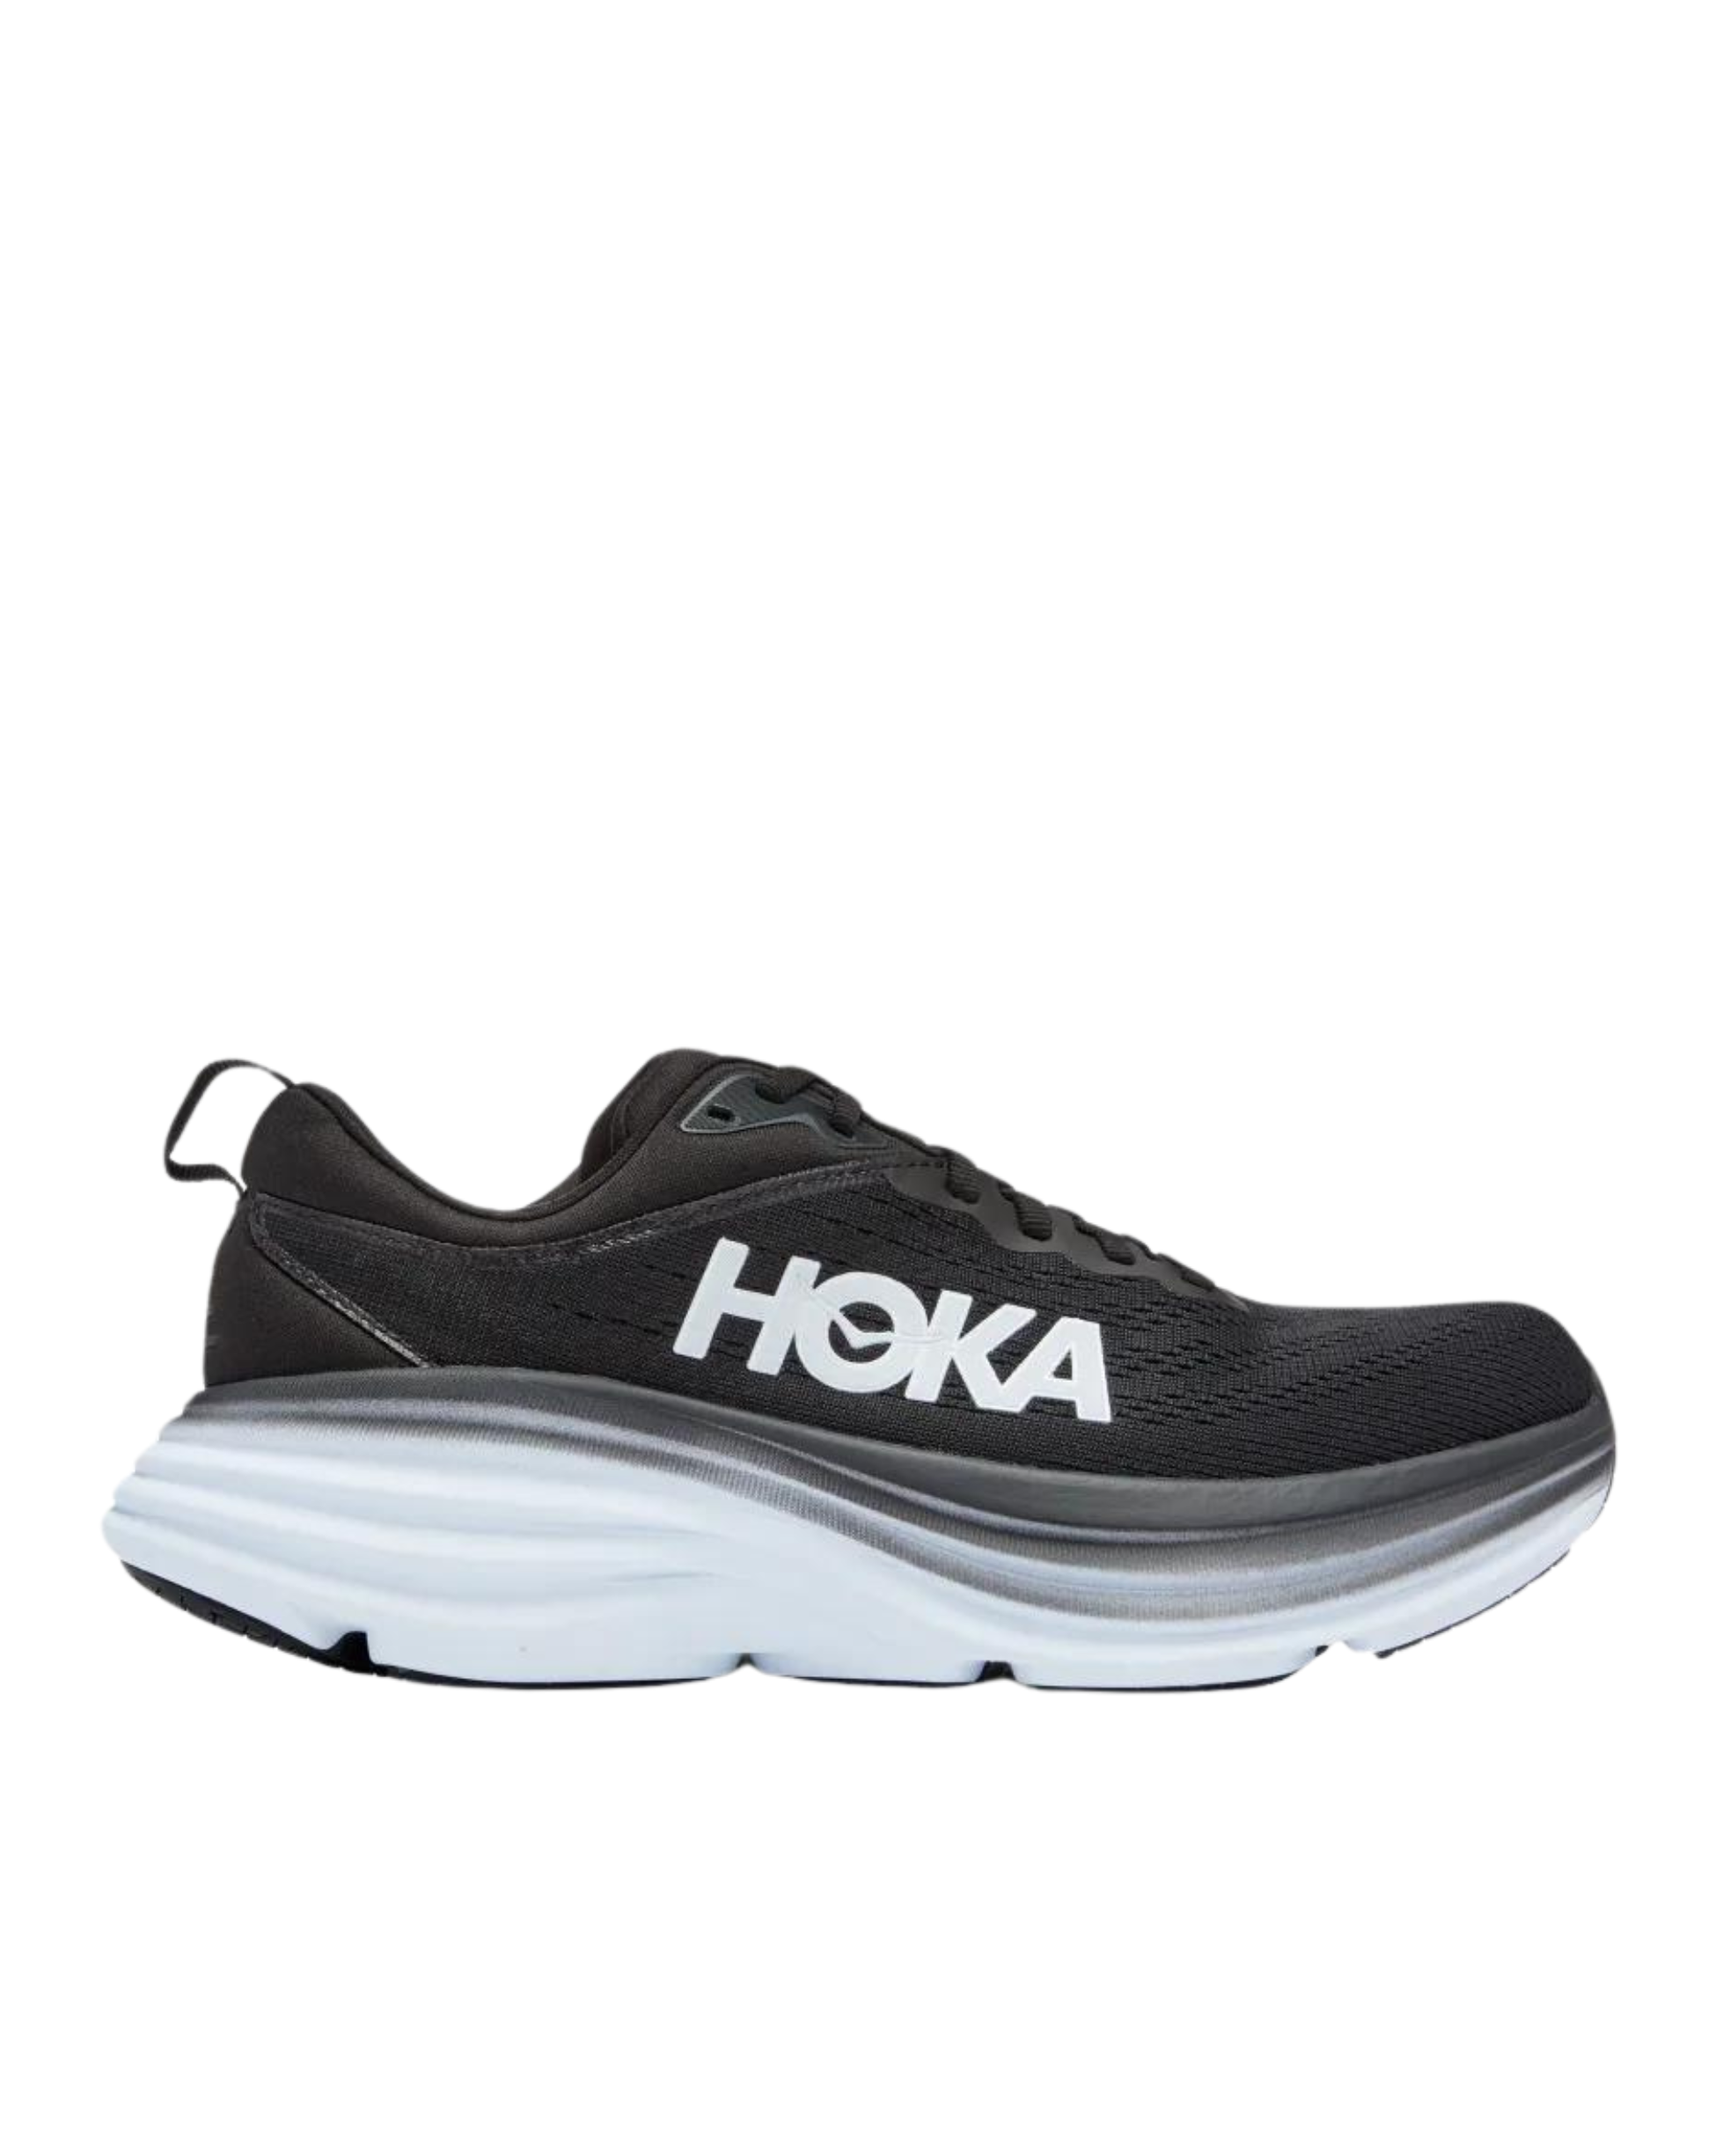 Understanding the Science Behind Hoka Aerobics Shoes